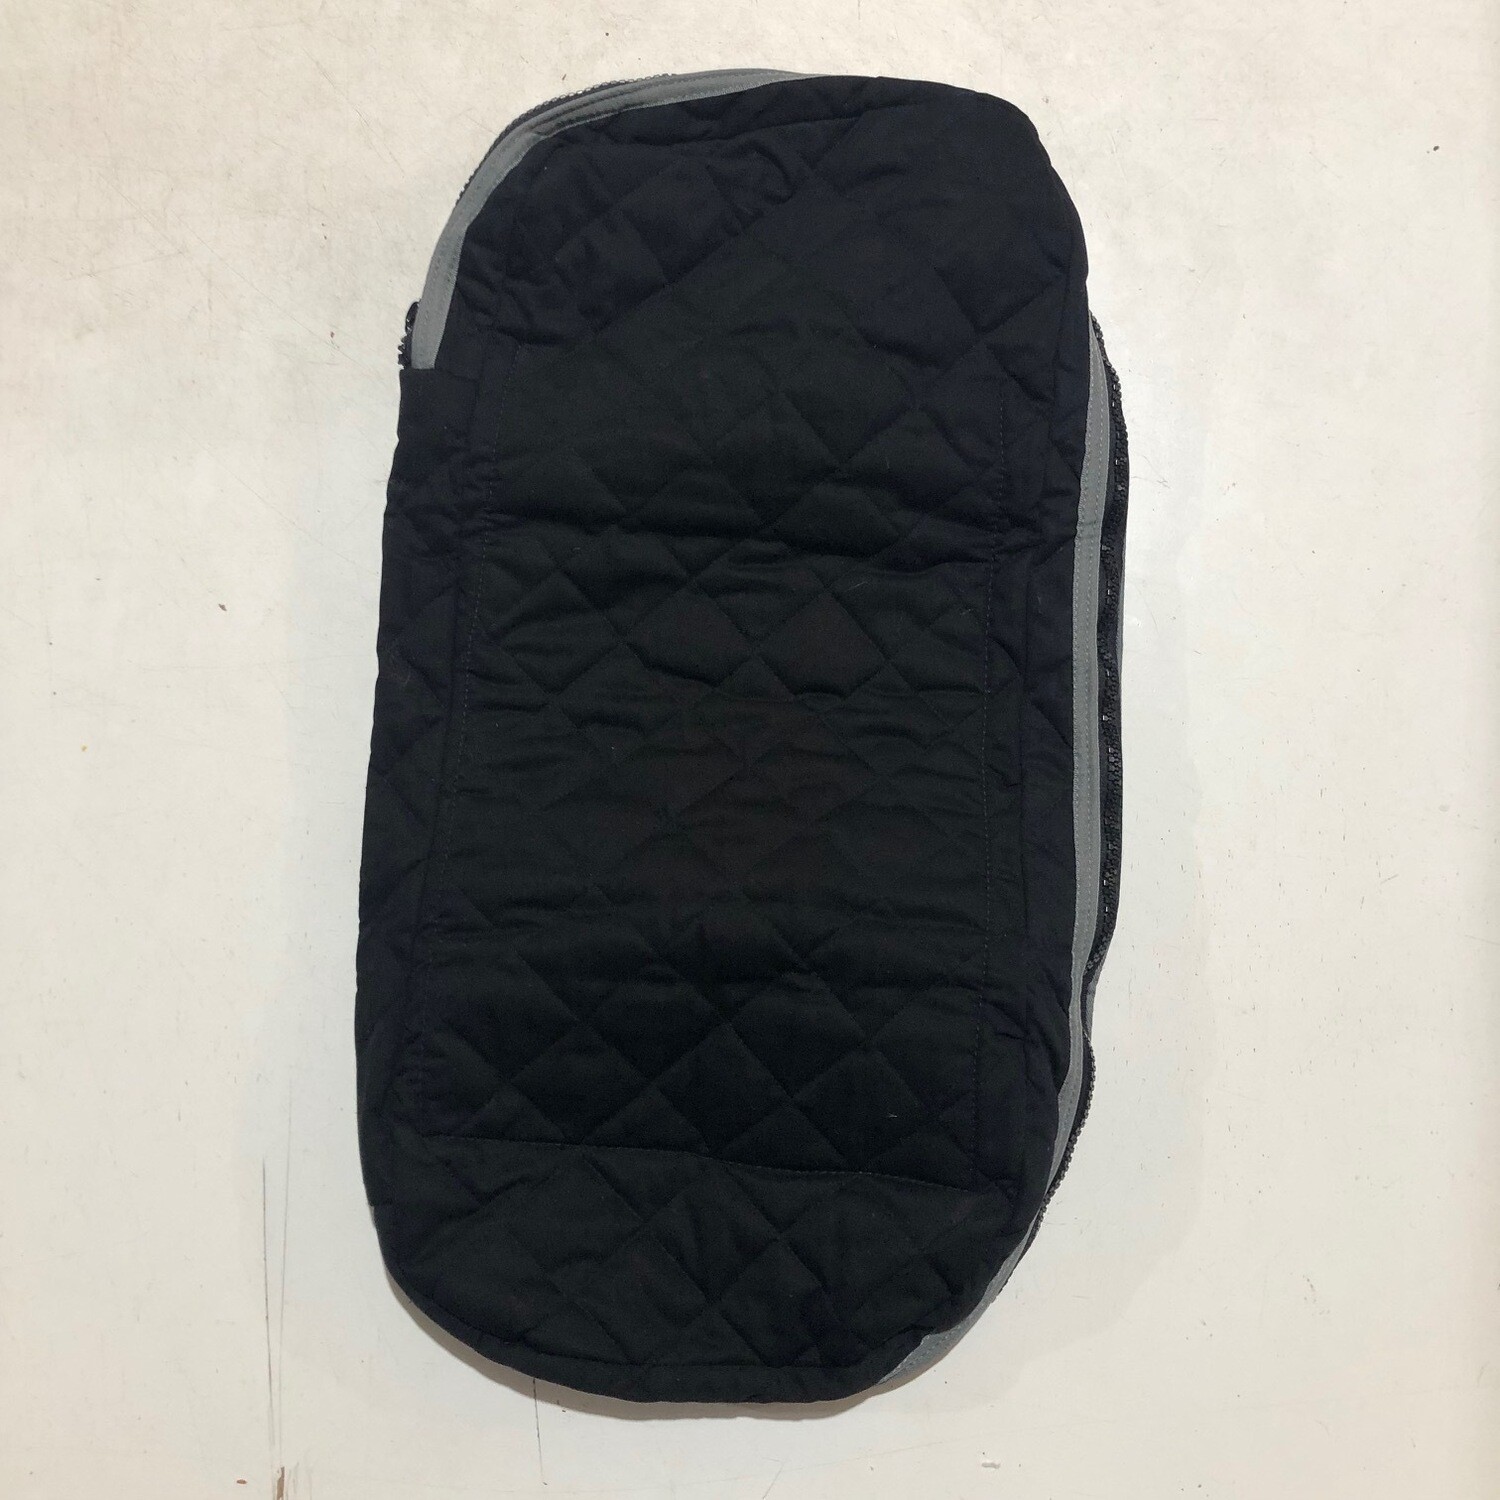 Bridle Bag - Quilted Black/Grey